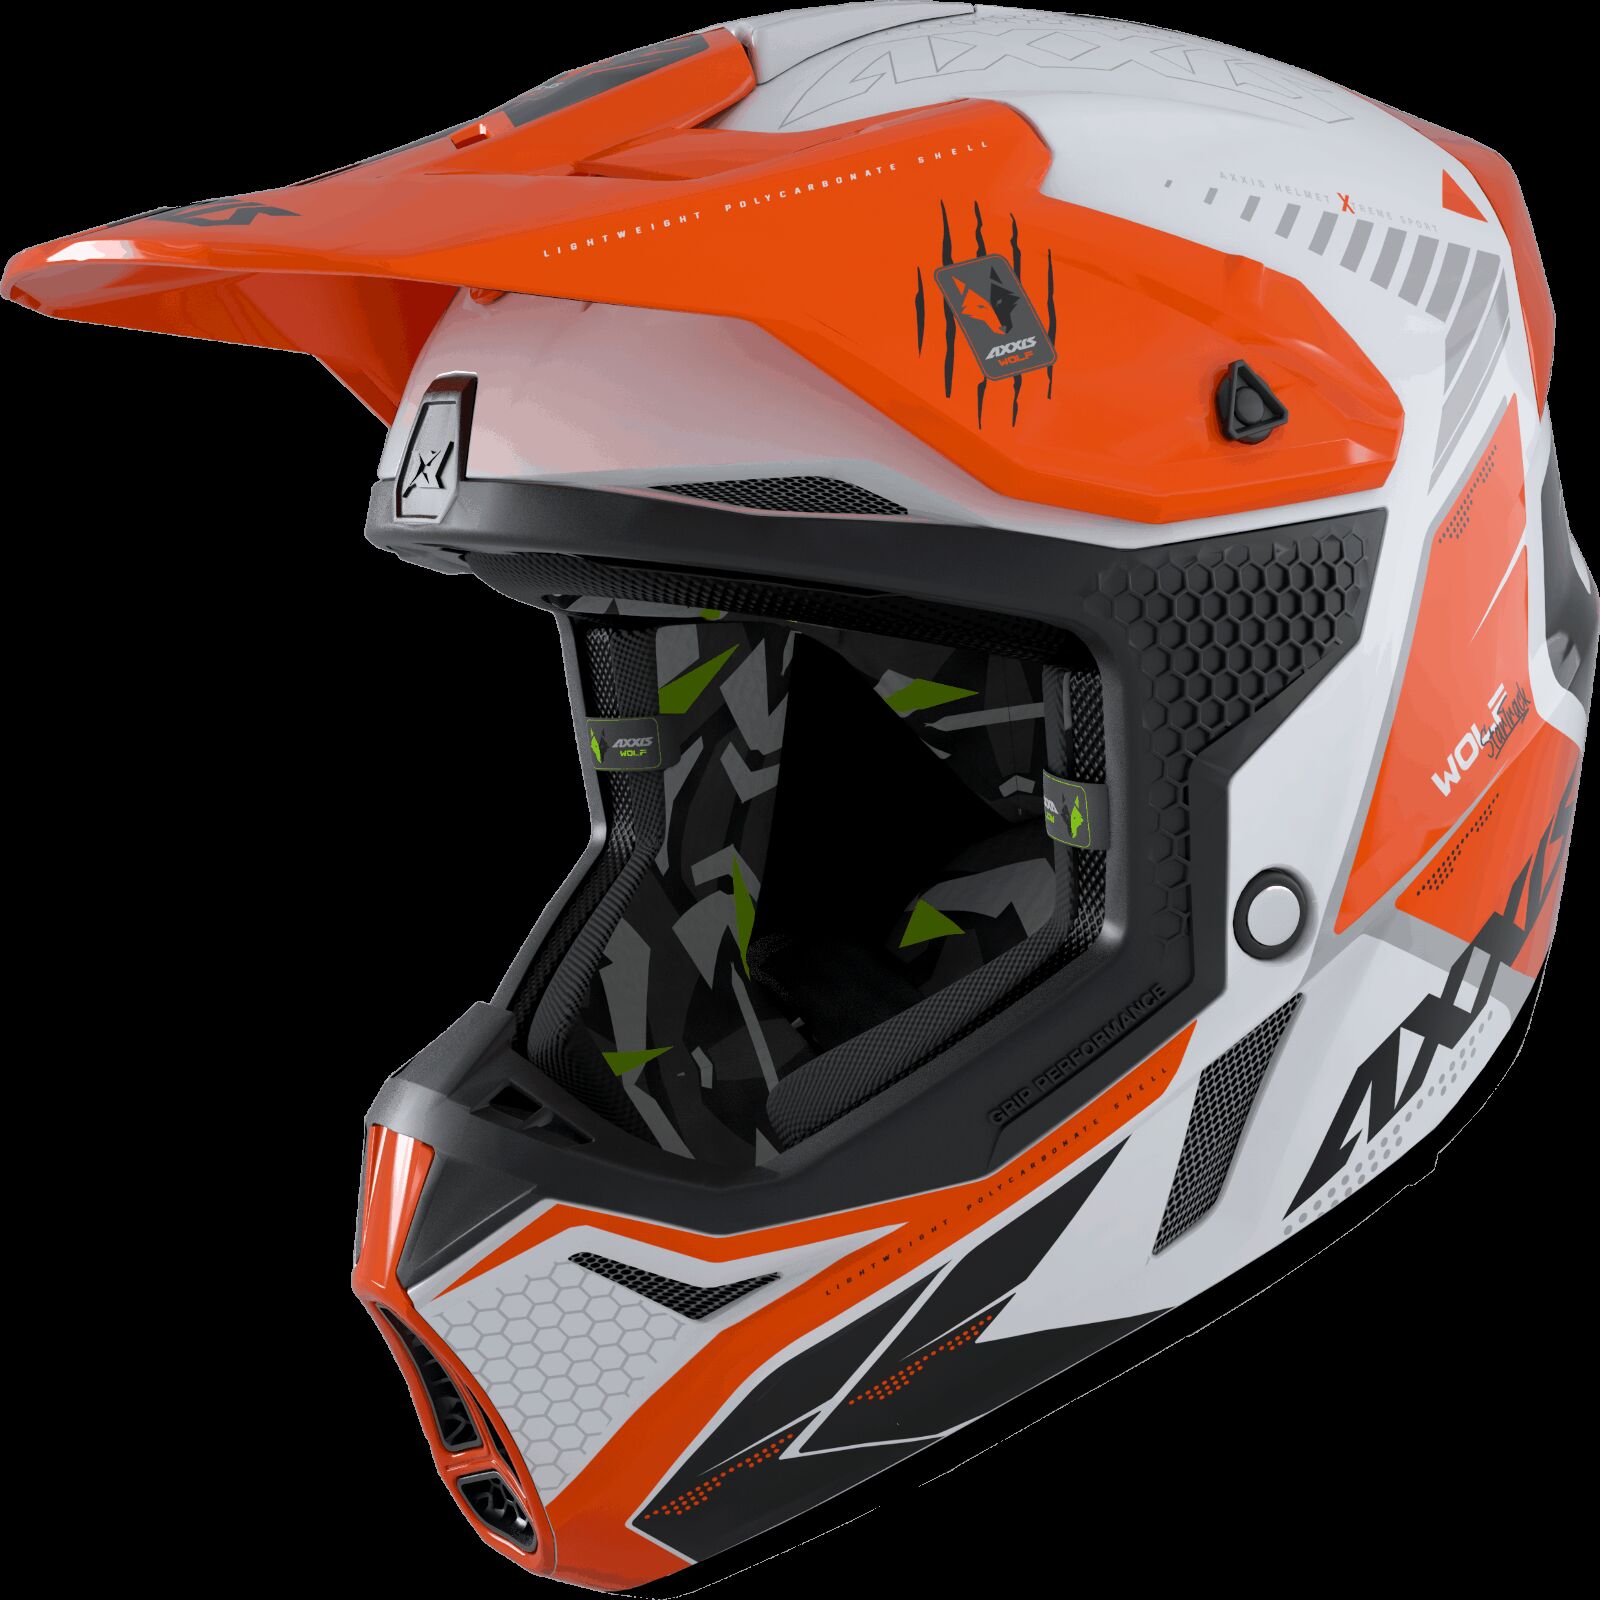 Obrázek produktu Motokrosová helma AXXIS WOLF ABS star track a4 lesklá fluor oranžová S 42587410404